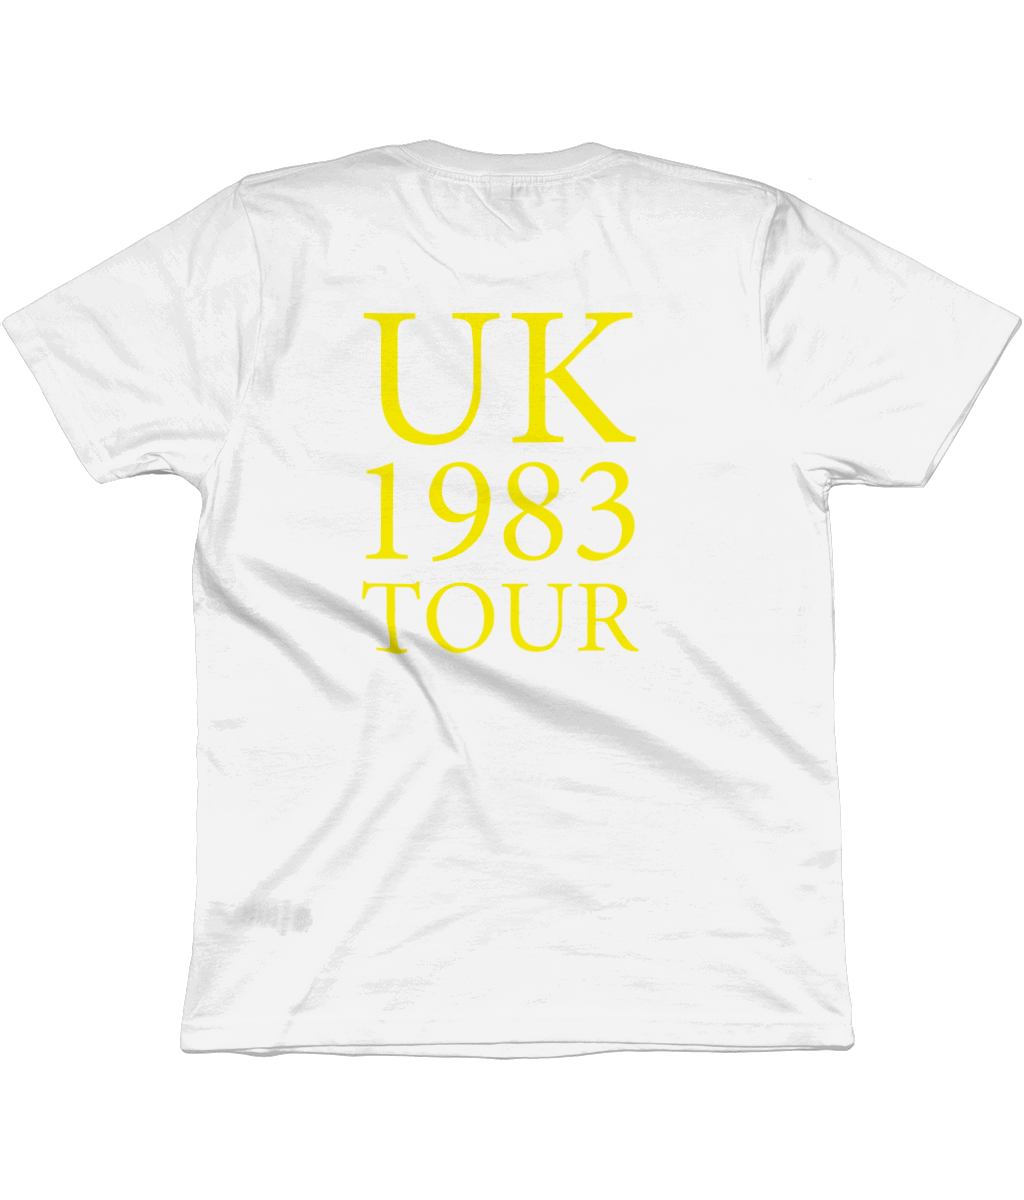 THE SMITHS - UK Tour 1983 - Back print version